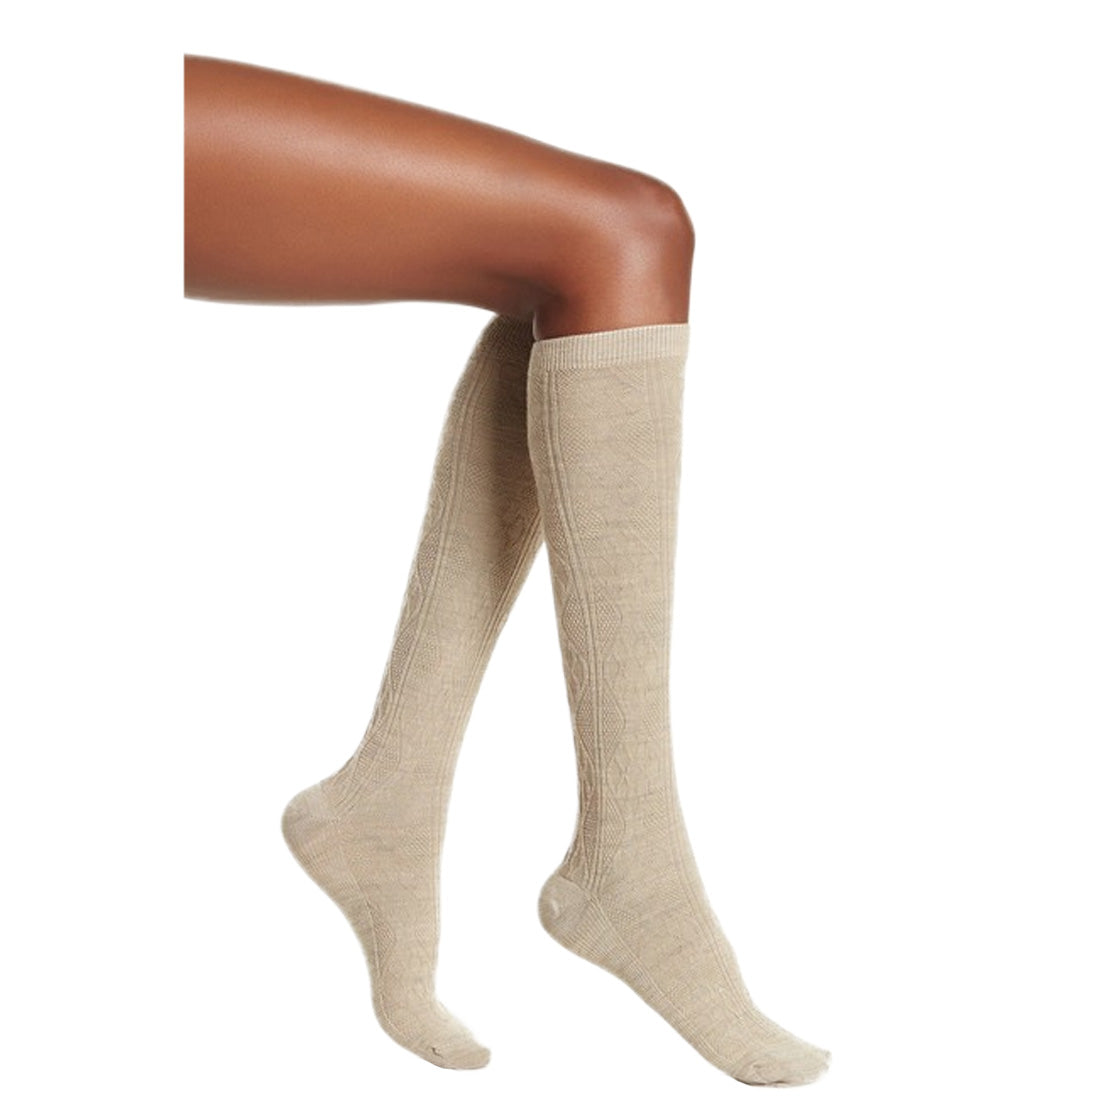 Smartwool Trellis Knee High Sock - Women's